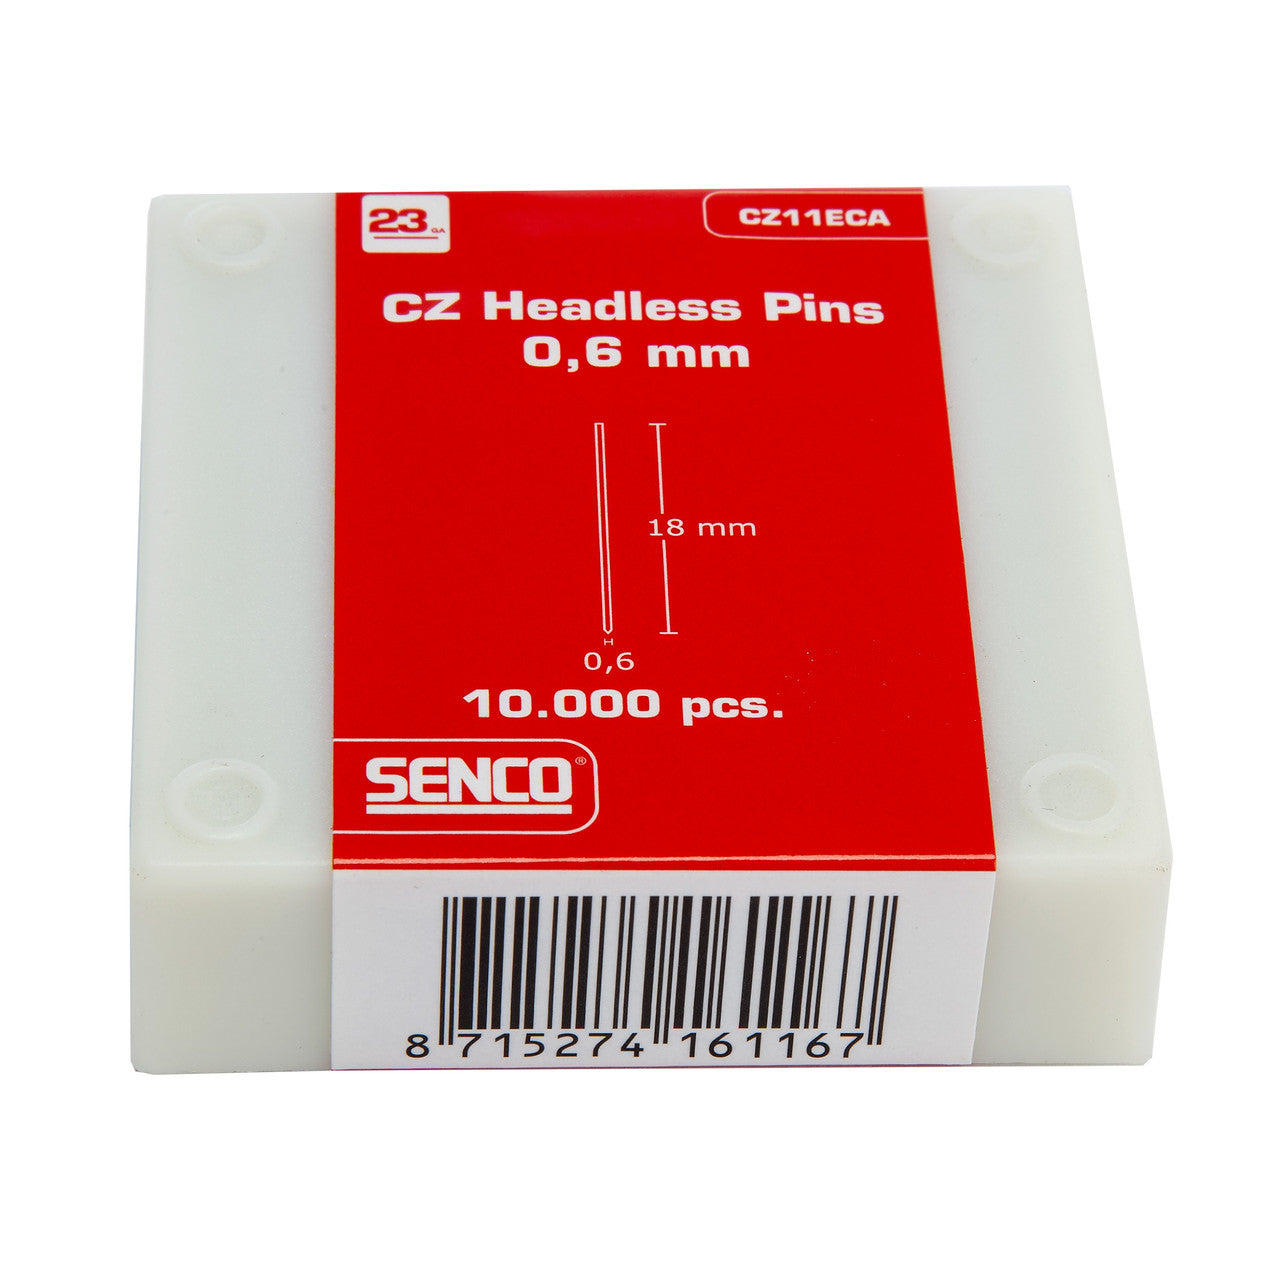 Senco CZ11ECA Galvanised Collated CZ Headless Pins 23 Gauge 0.6mm x 18mm (10,000 in Box)